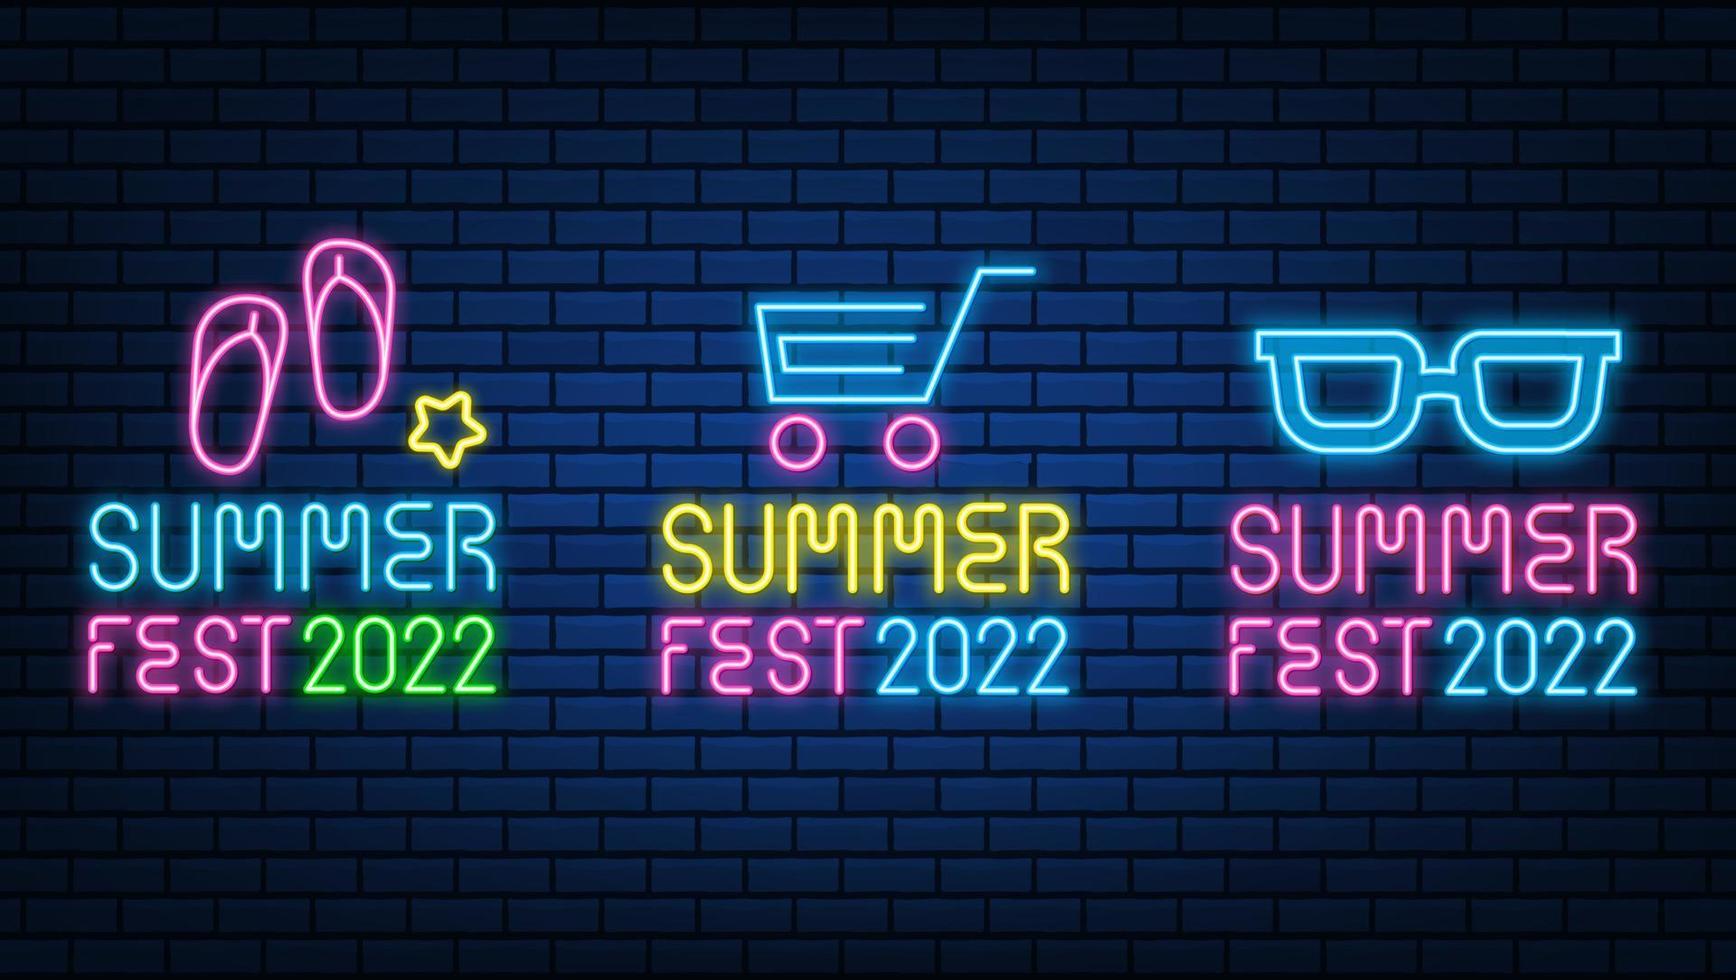 neon summer fest text 2022 sinais de cores brilhantes brilhando led ou lâmpadas de halogênio banners de moldura. no conjunto de vetores de parede de tijolo.